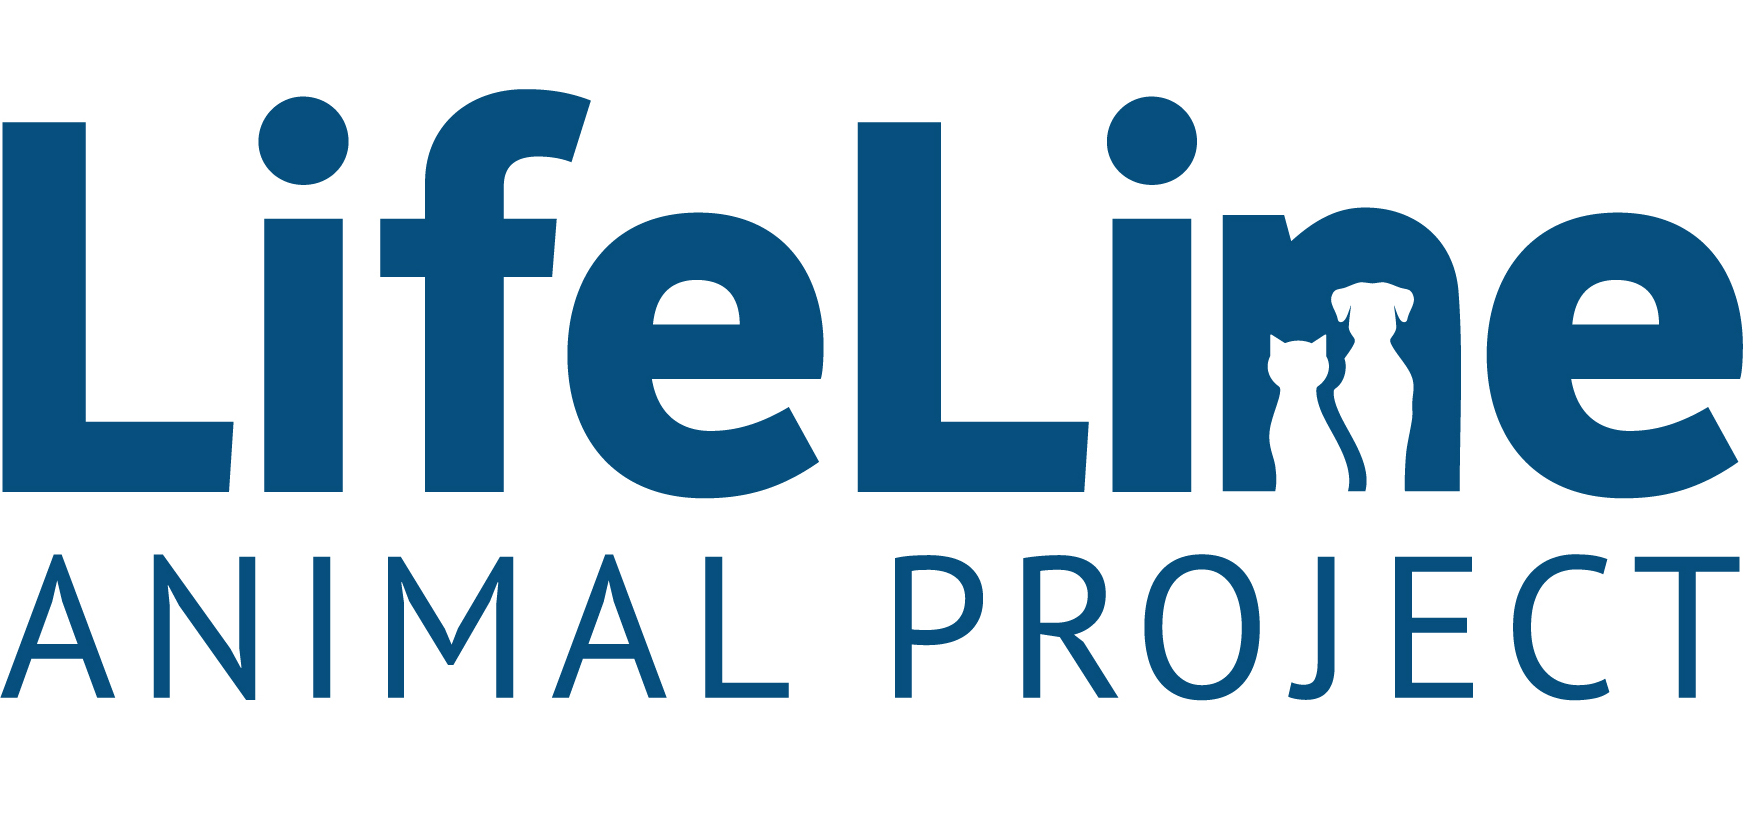 Lifeline Animal Project